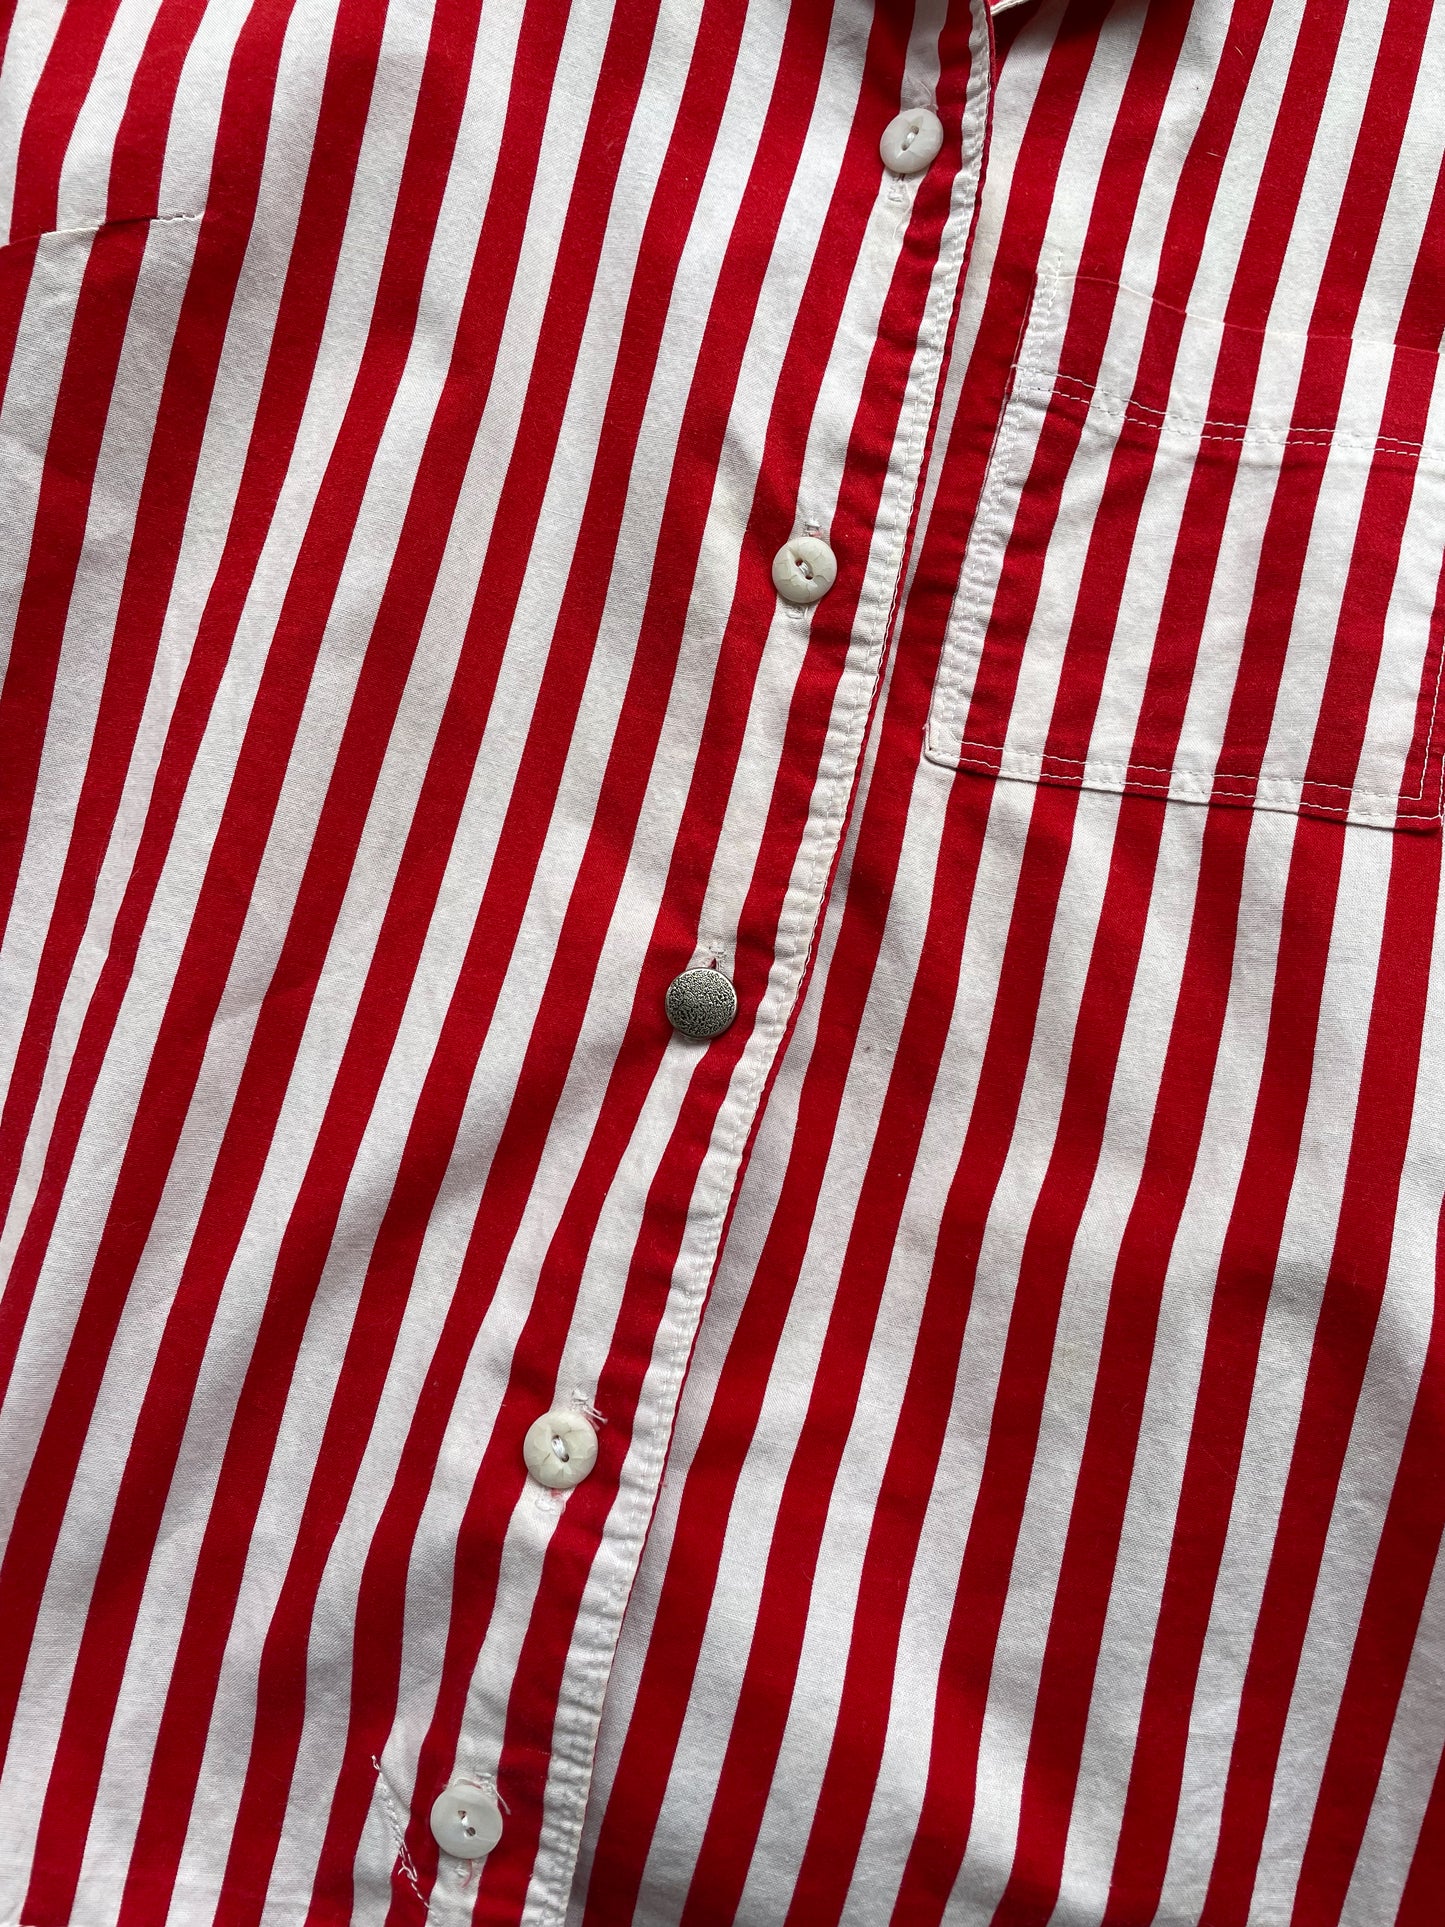 Handmade Candy Stripe Shirt—[S]